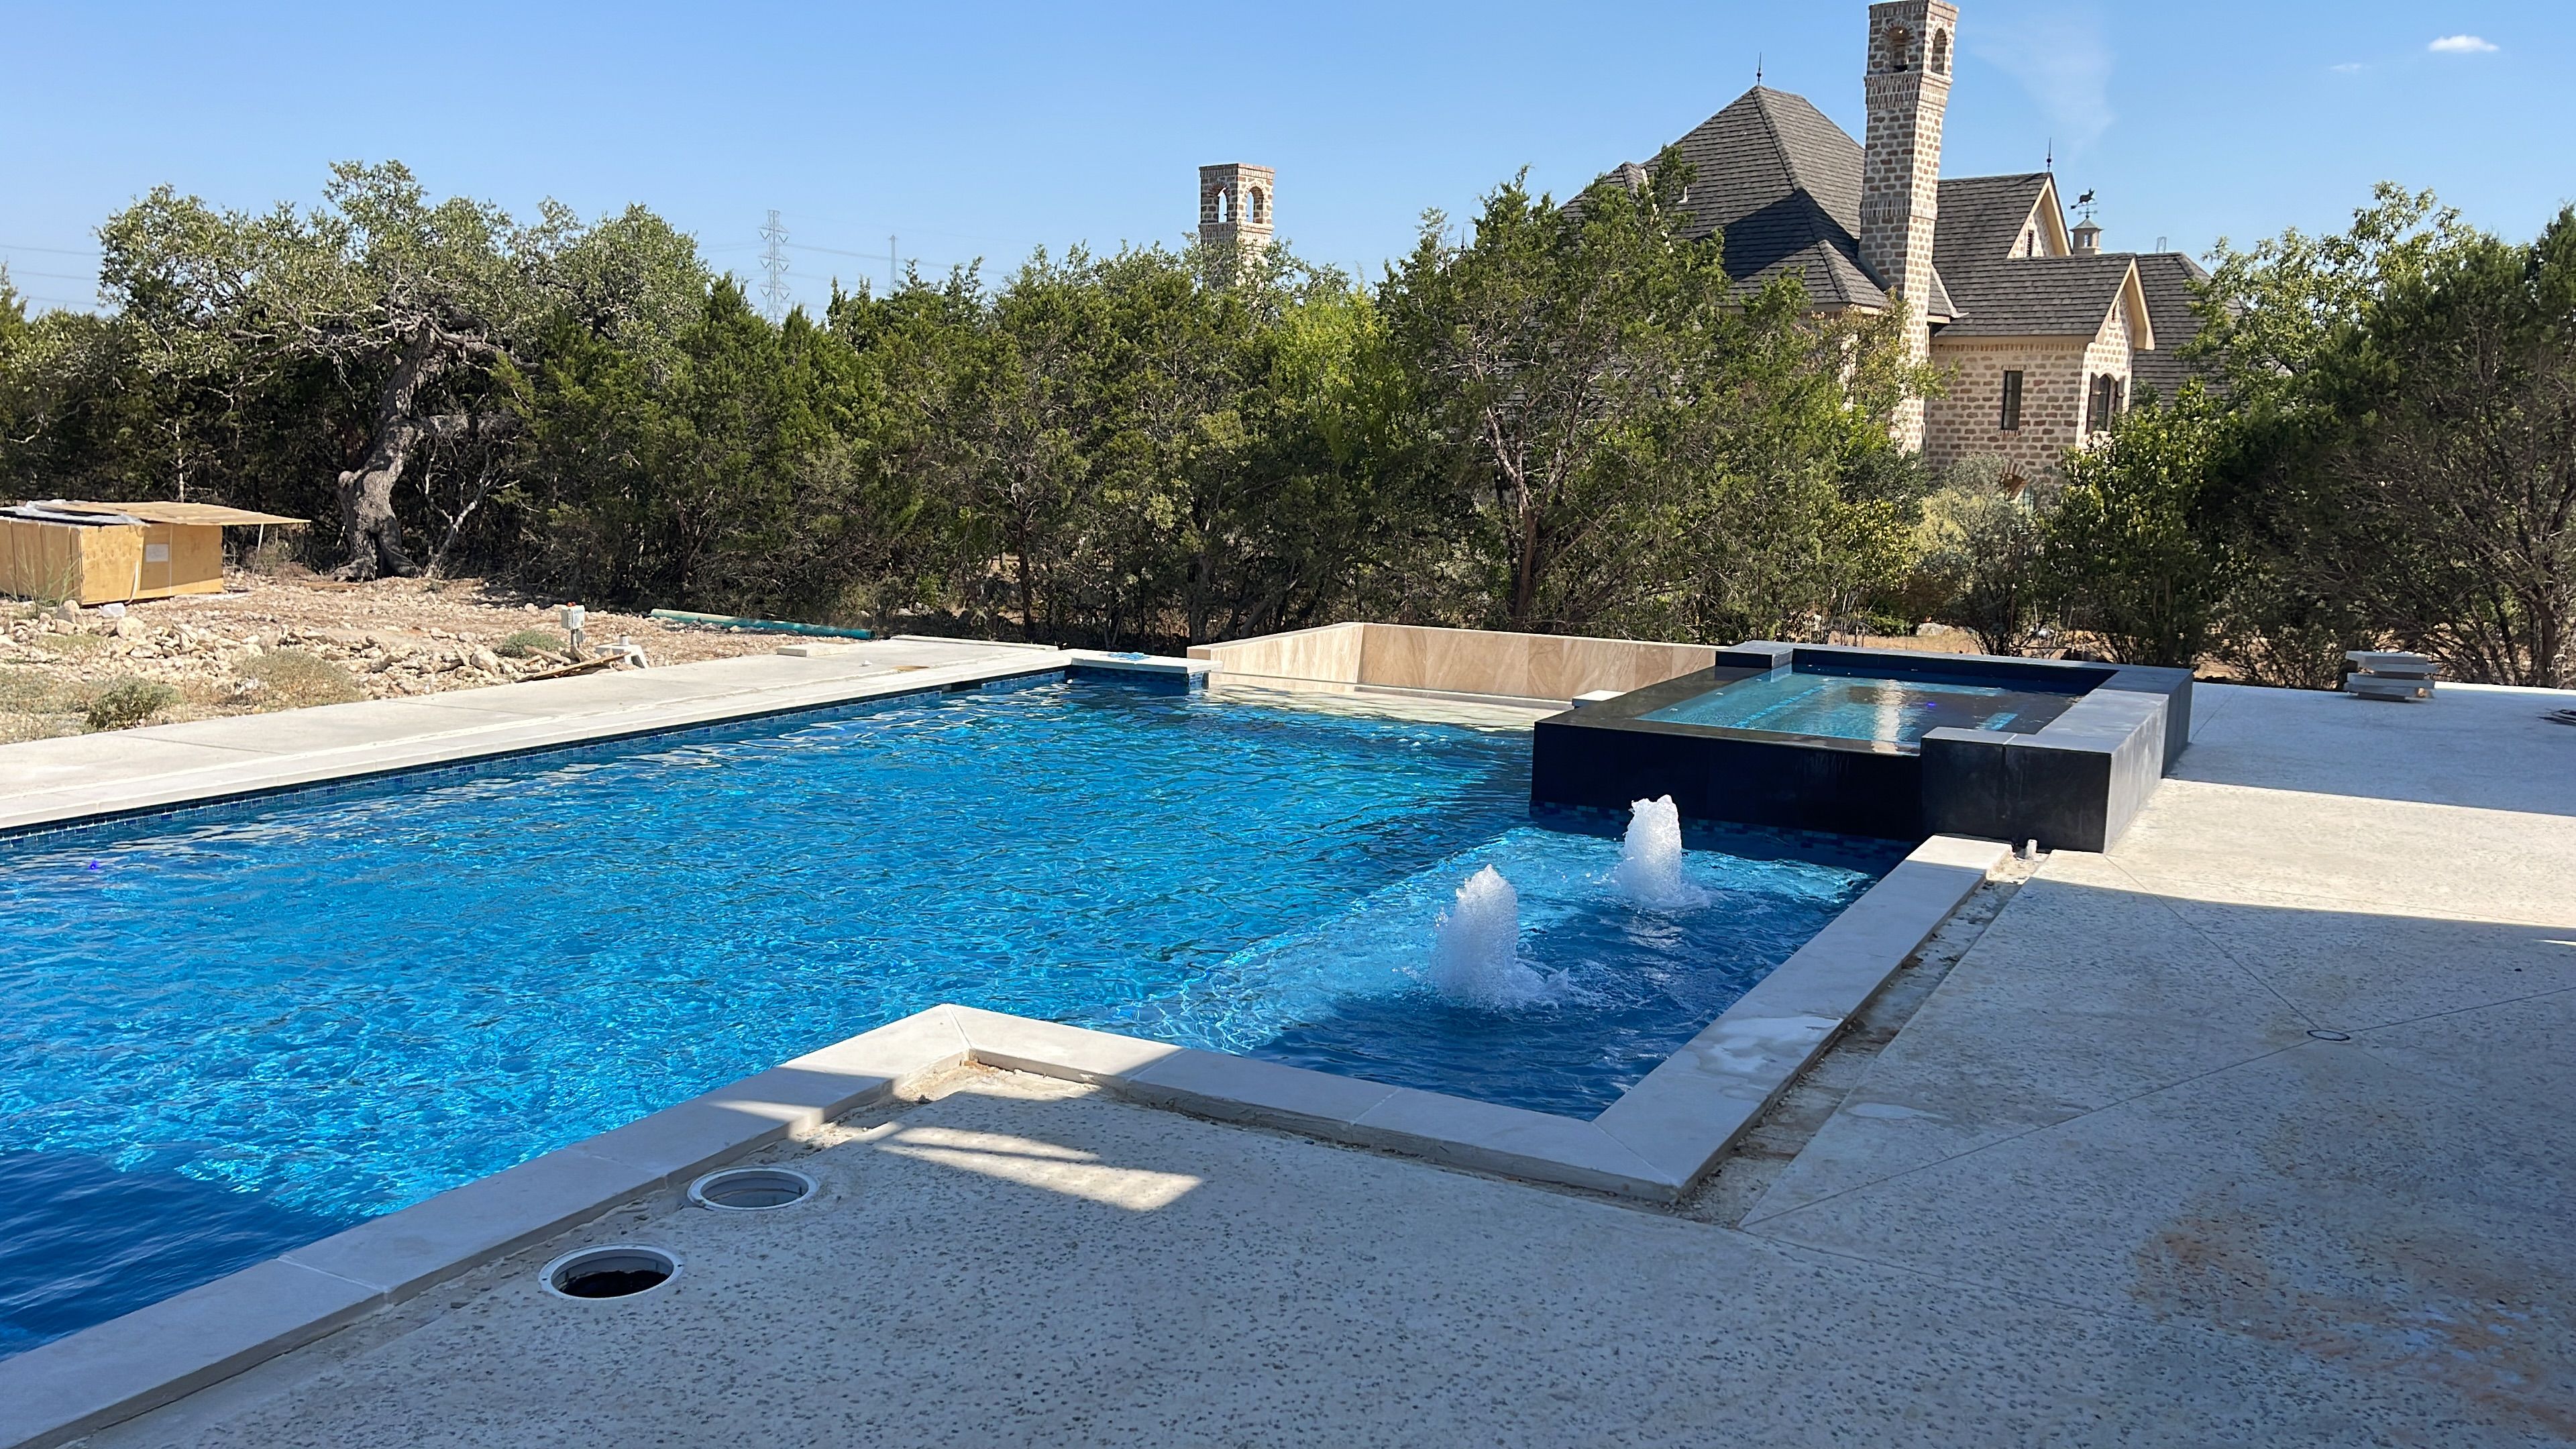 Residential Pools for JV Pool & Associates in San Antonio, TX